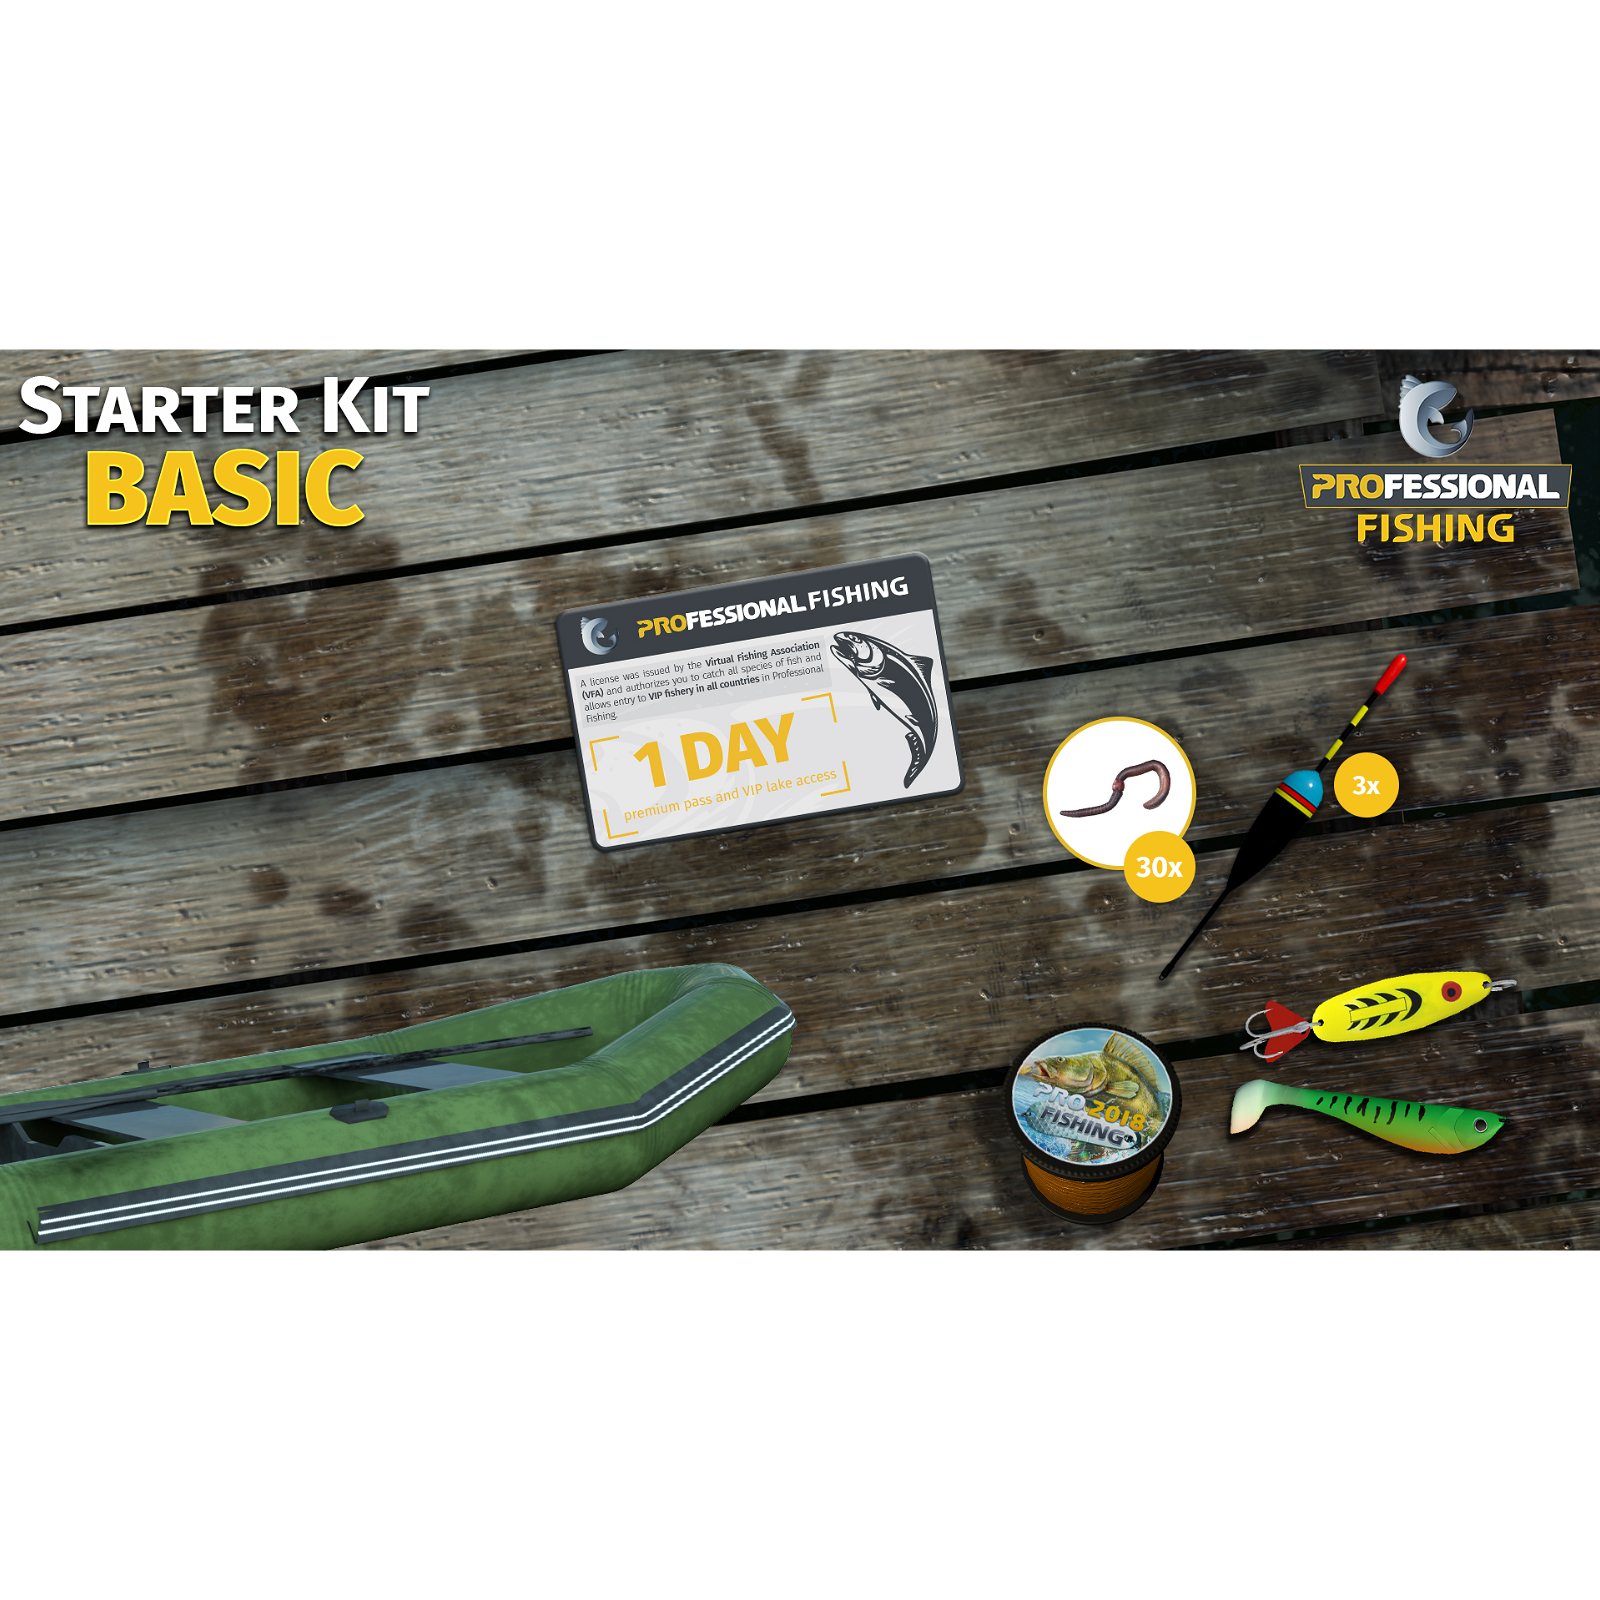 Joc Professional Fishing - Catfish Kit cod de activare Steam 